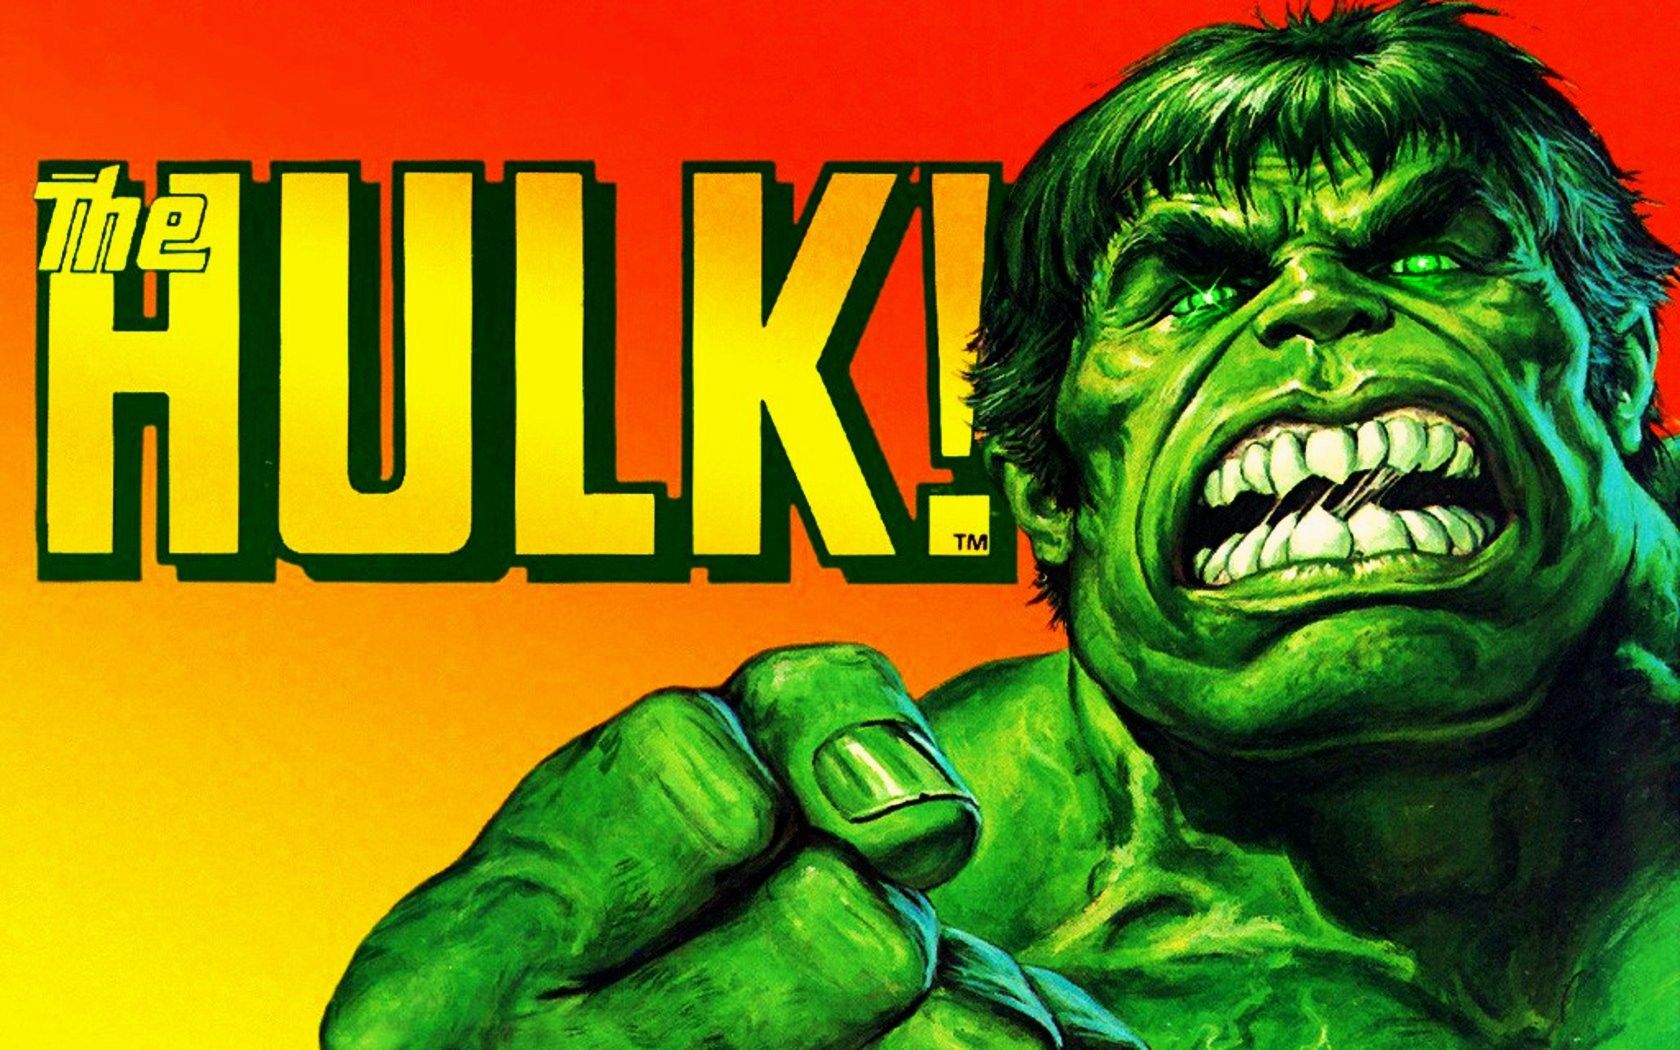 The Incredible Hulk Wallpaper: The Hulk Wallpaper. Incredible hulk, Hulk, Marvel comics hulk